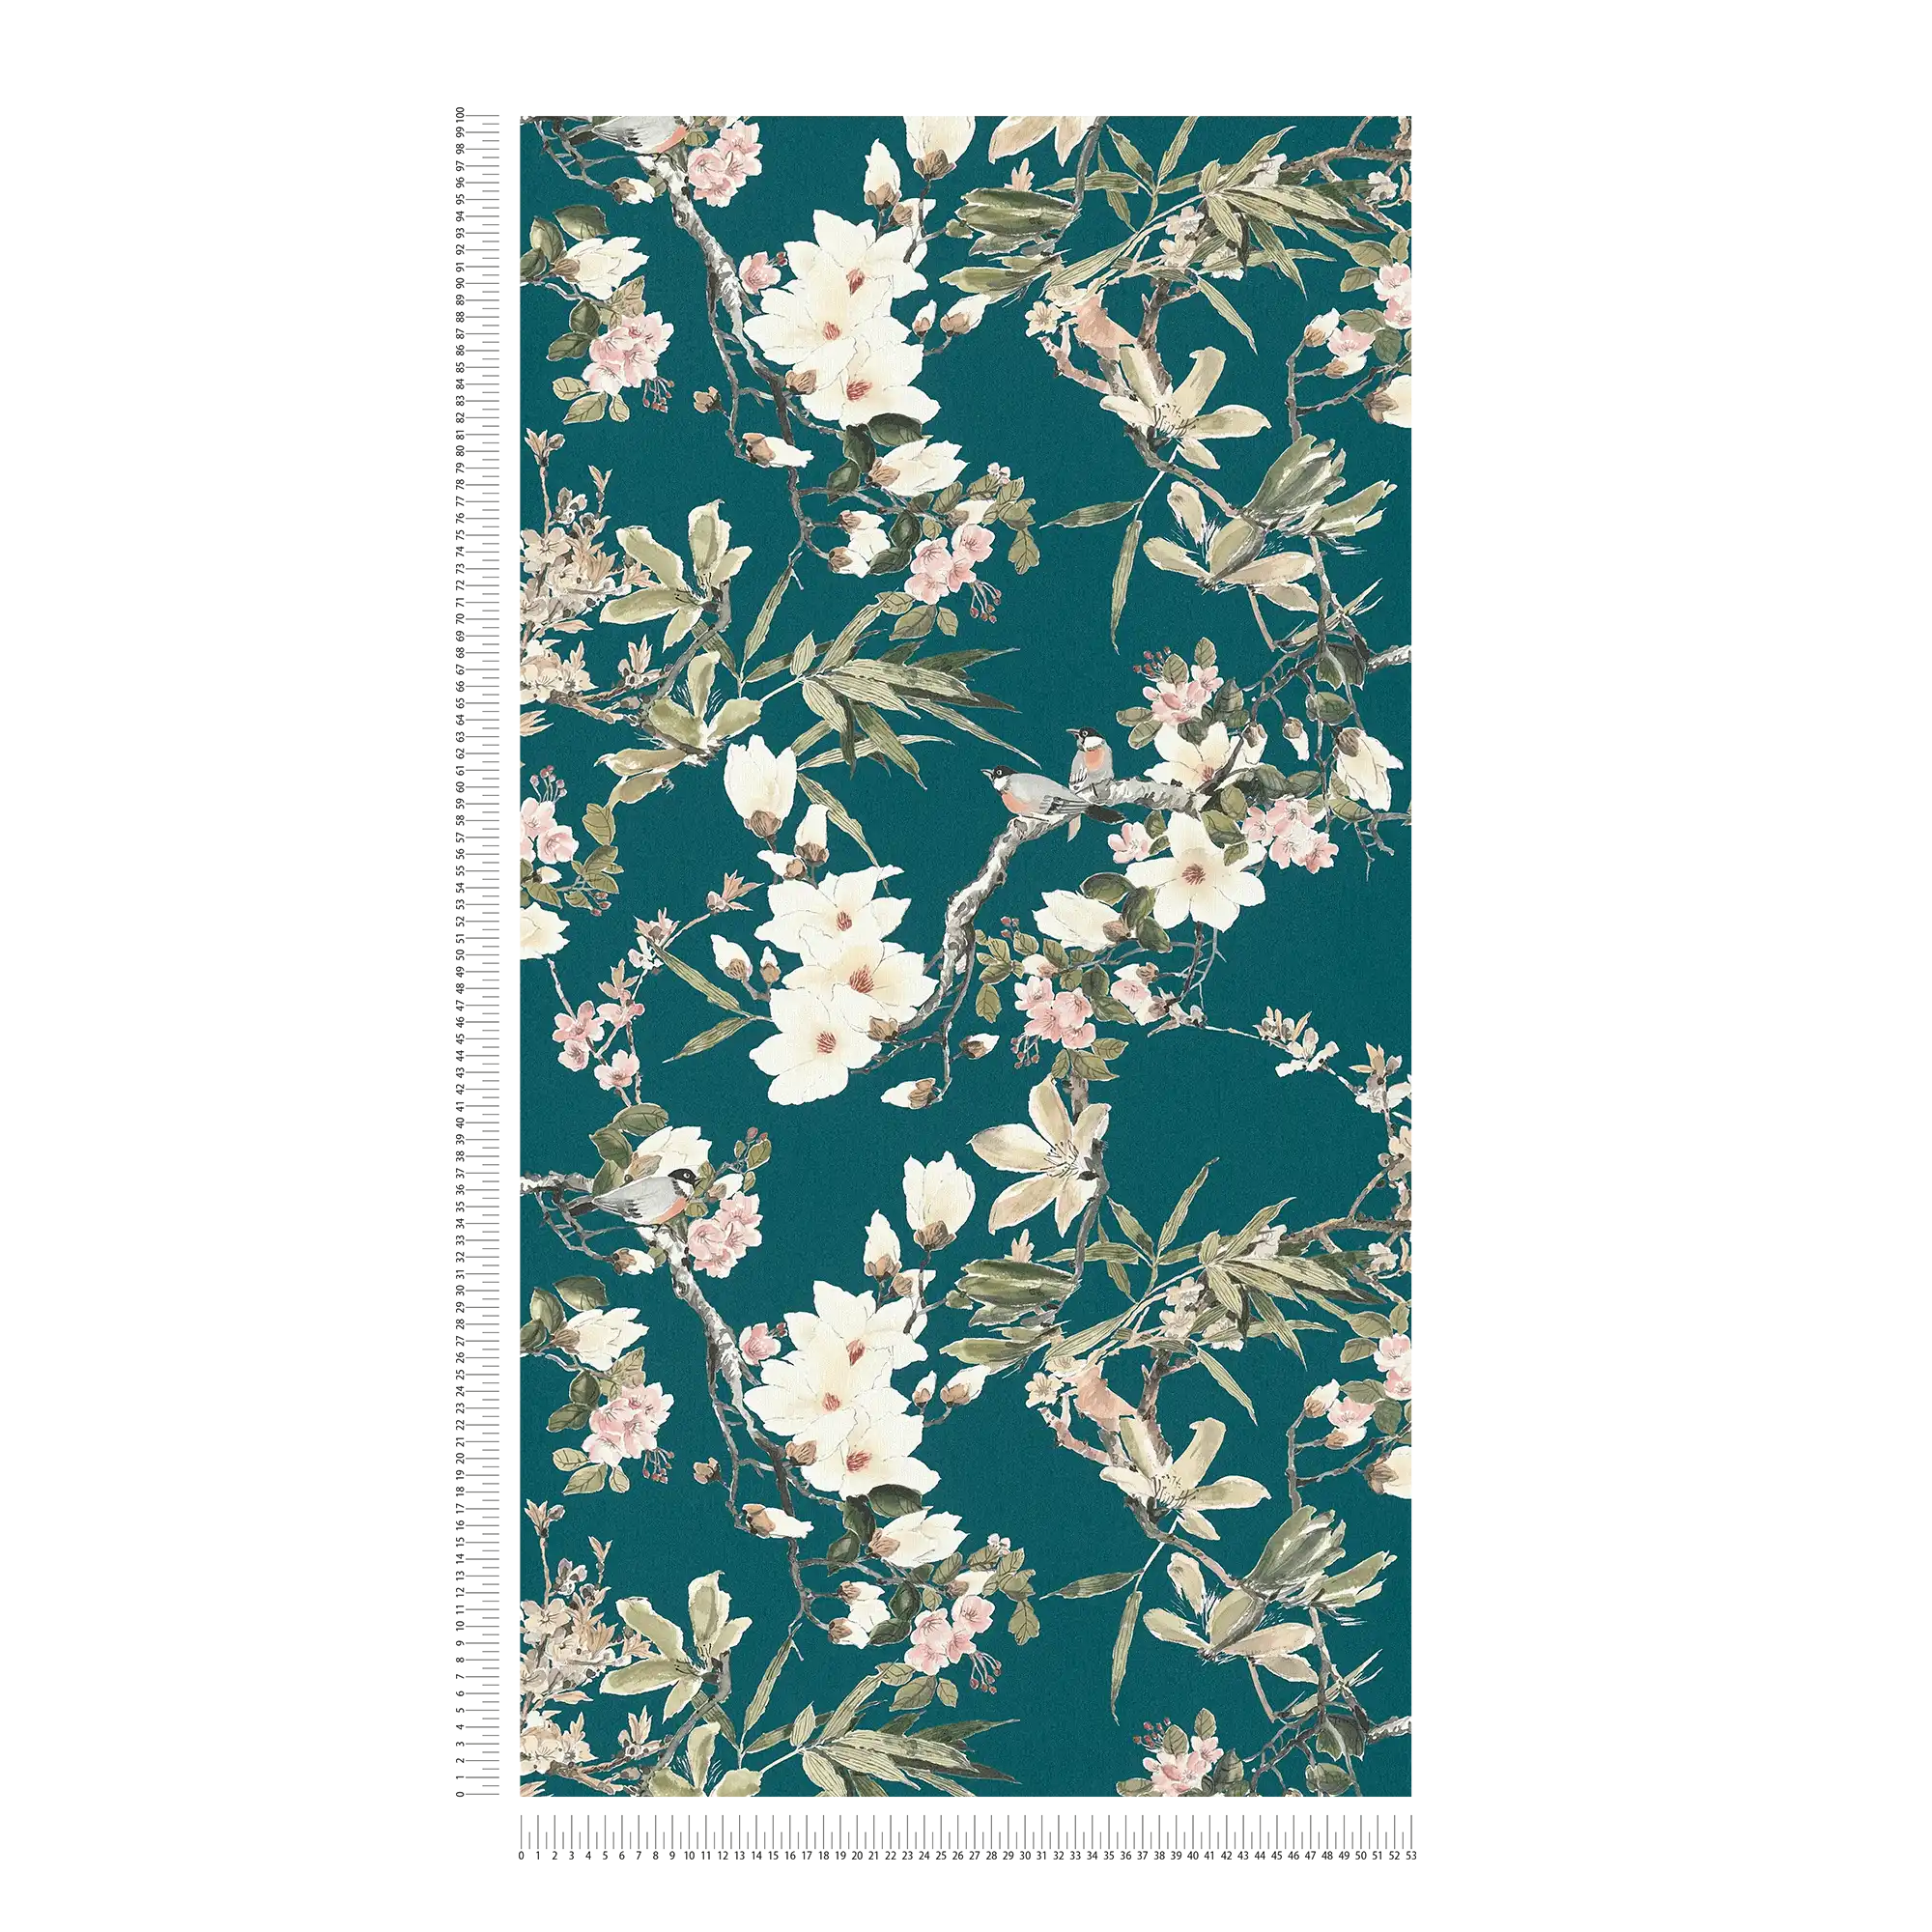             Carta da parati in tessuto non tessuto disegno natura fiori rami & uccelli - blu, verde
        